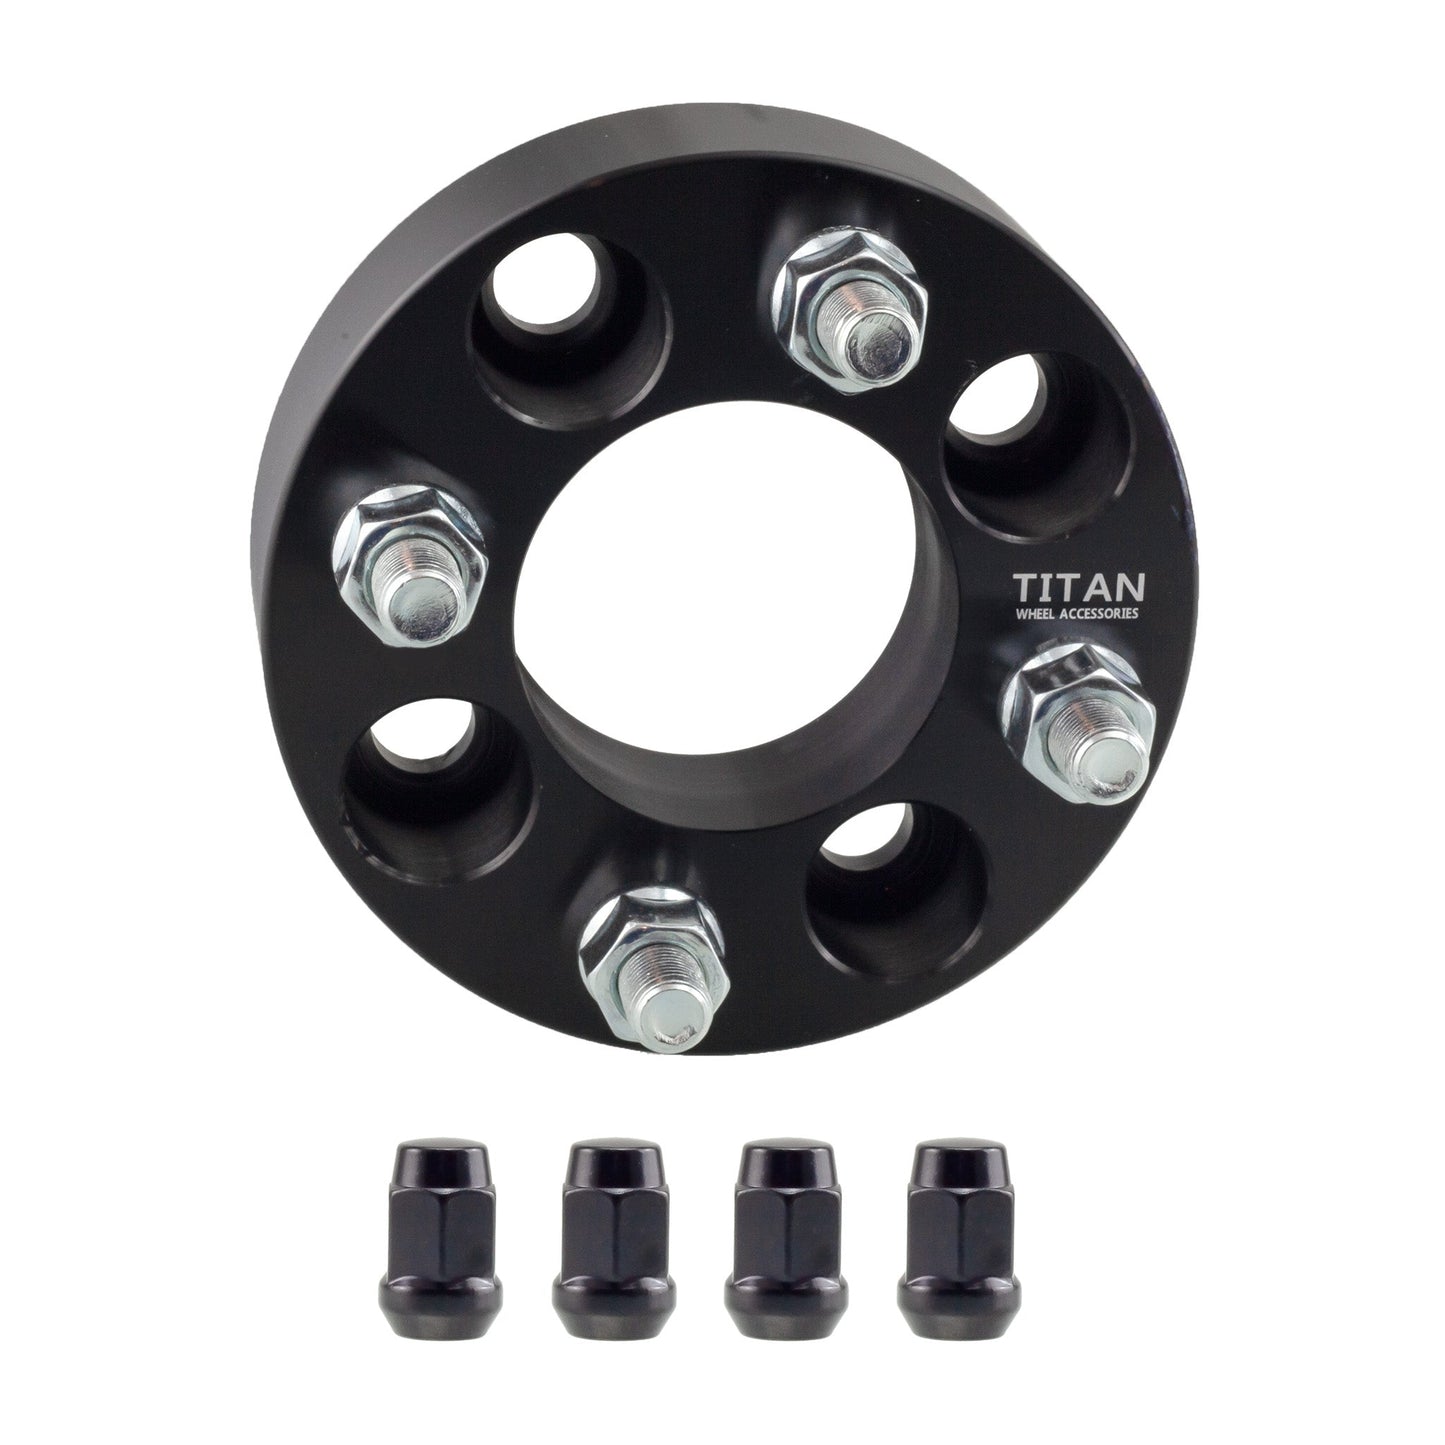 15mm Titan Wheel Spacers for Infiniti G20 Nissan 240SX Altima Sentra | 4x114.3 (4x4.5) | 66.1 Hubcentric | 12x1.25 Studs | Titan Wheel Accessories